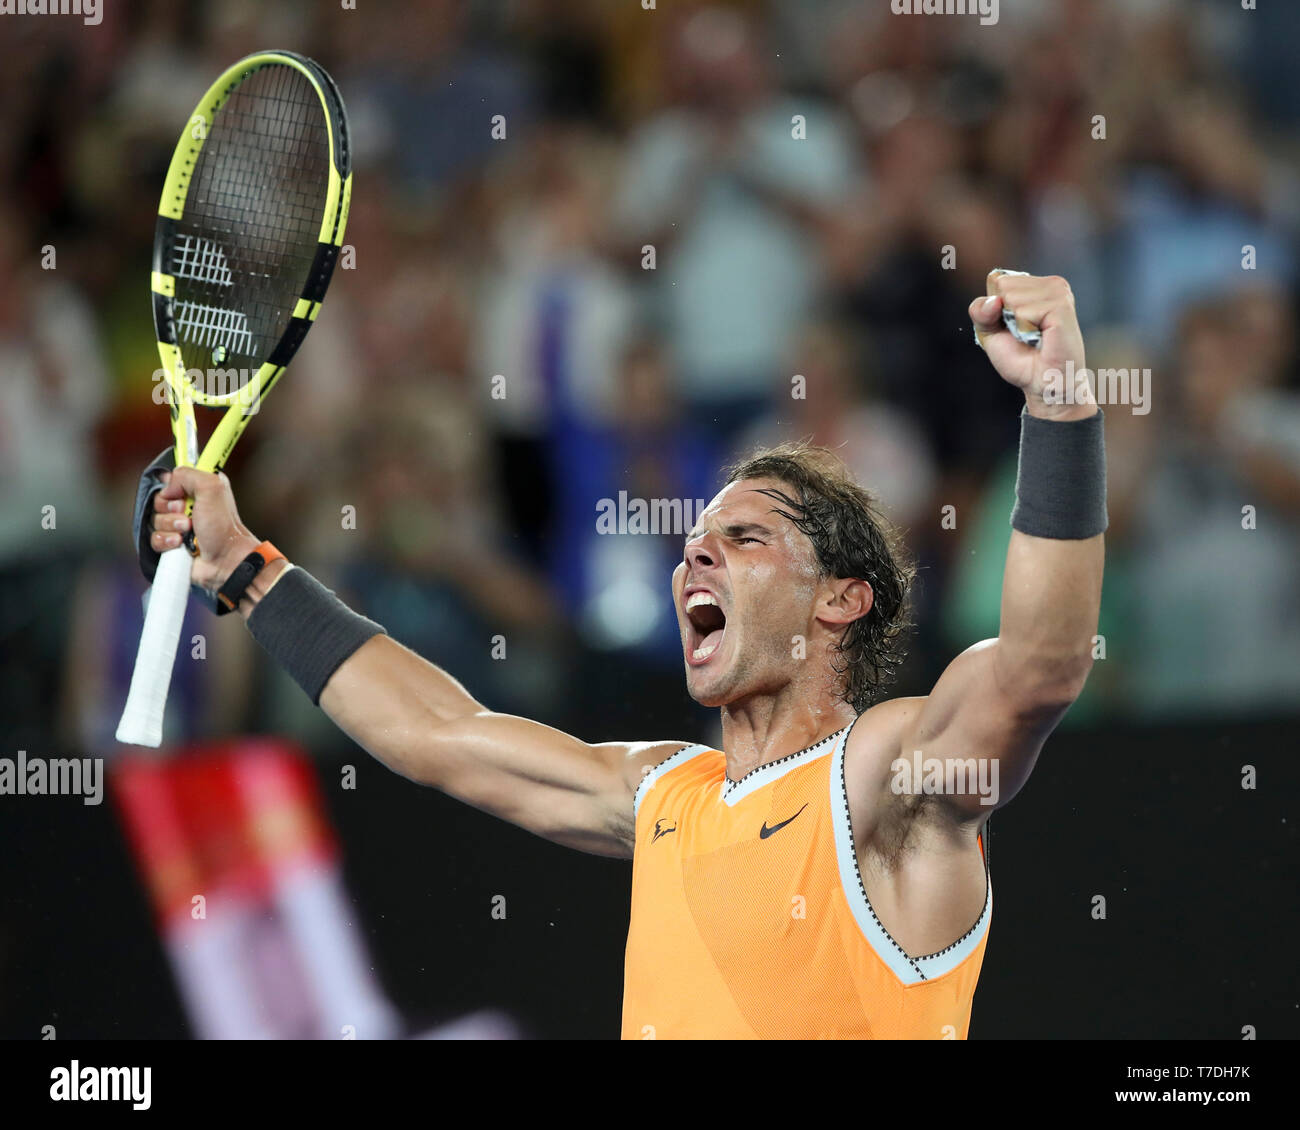 Spanish tennis Rafael Nadal celebrating his victory Australian Open 2019 tournament, Melbourne Melbourne, Victoria, Austral Stock Photo - Alamy